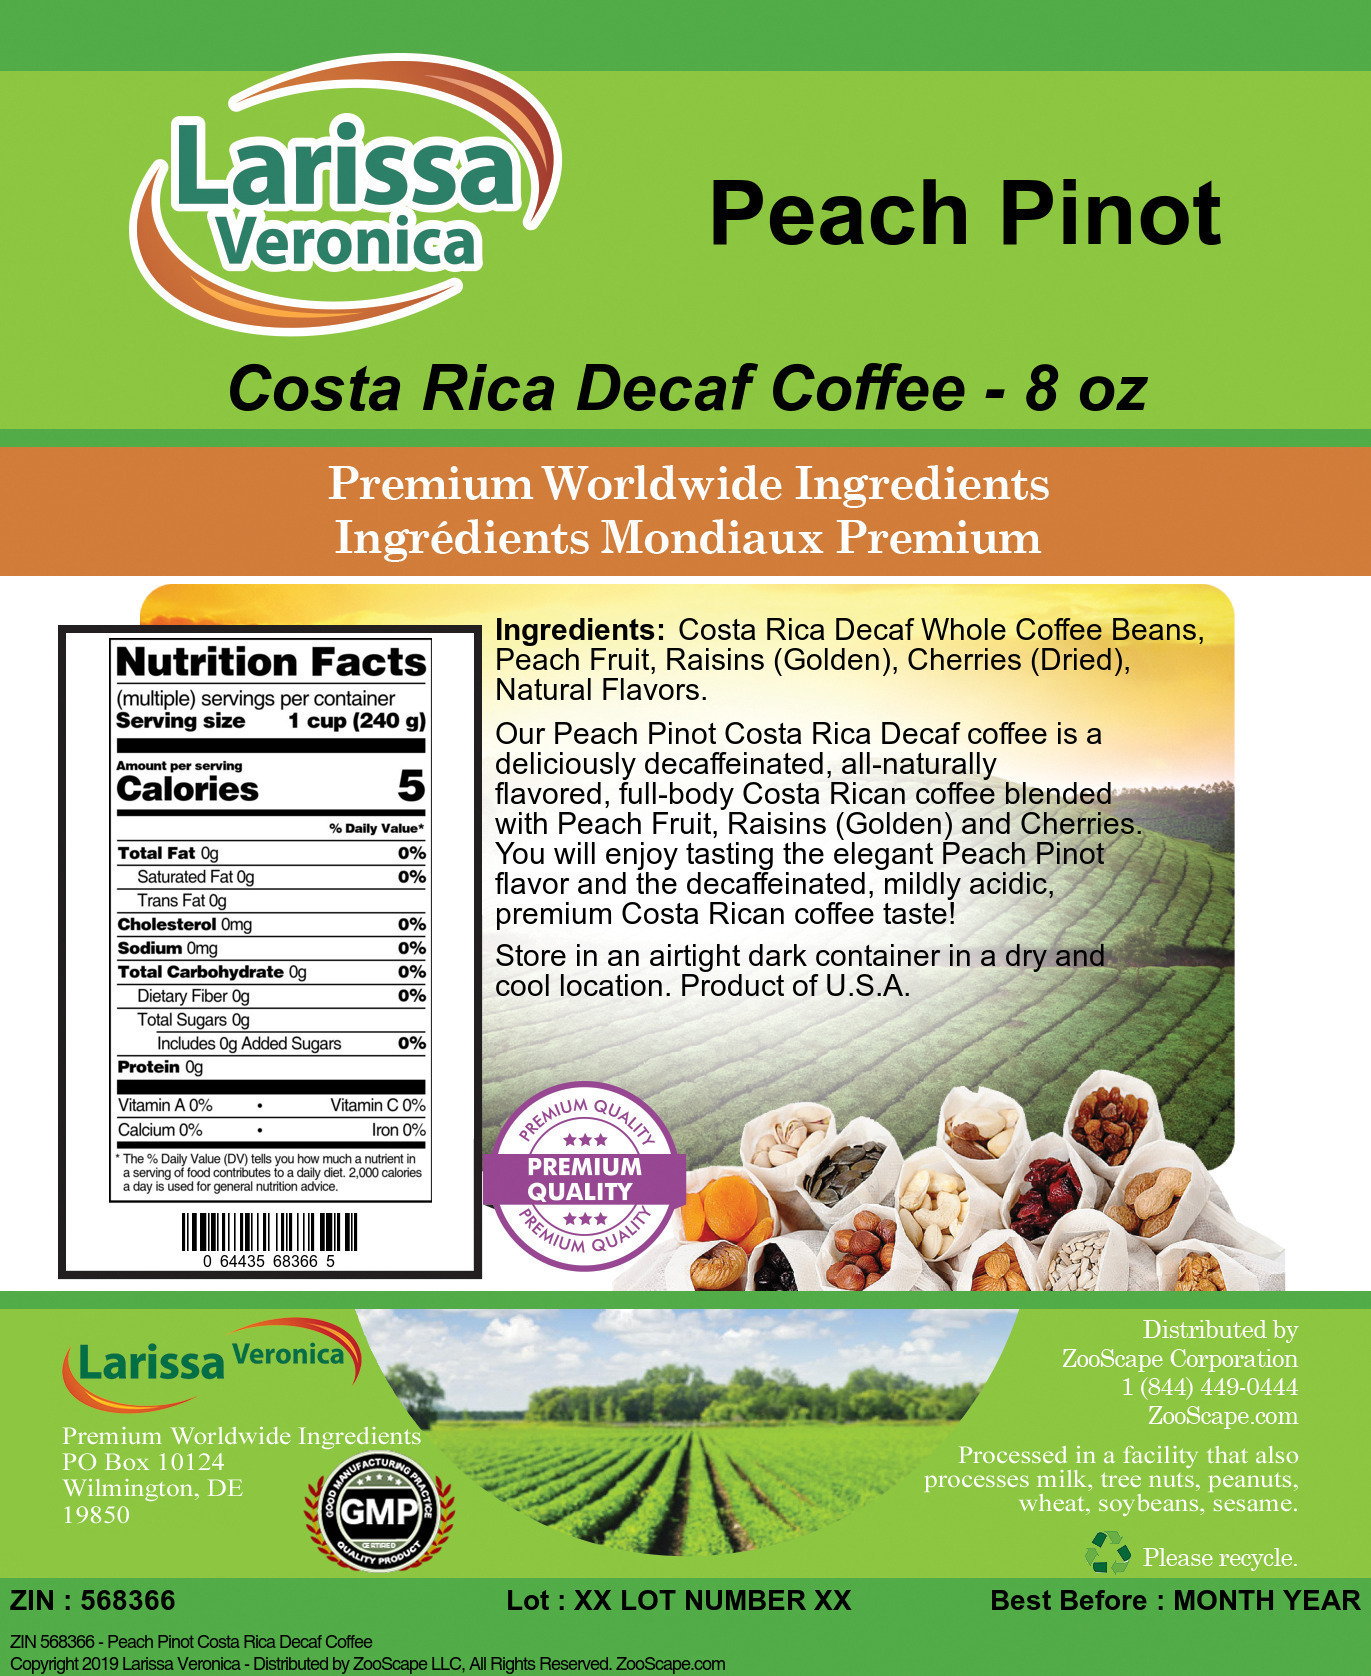 Peach Pinot Costa Rica Decaf Coffee - Label